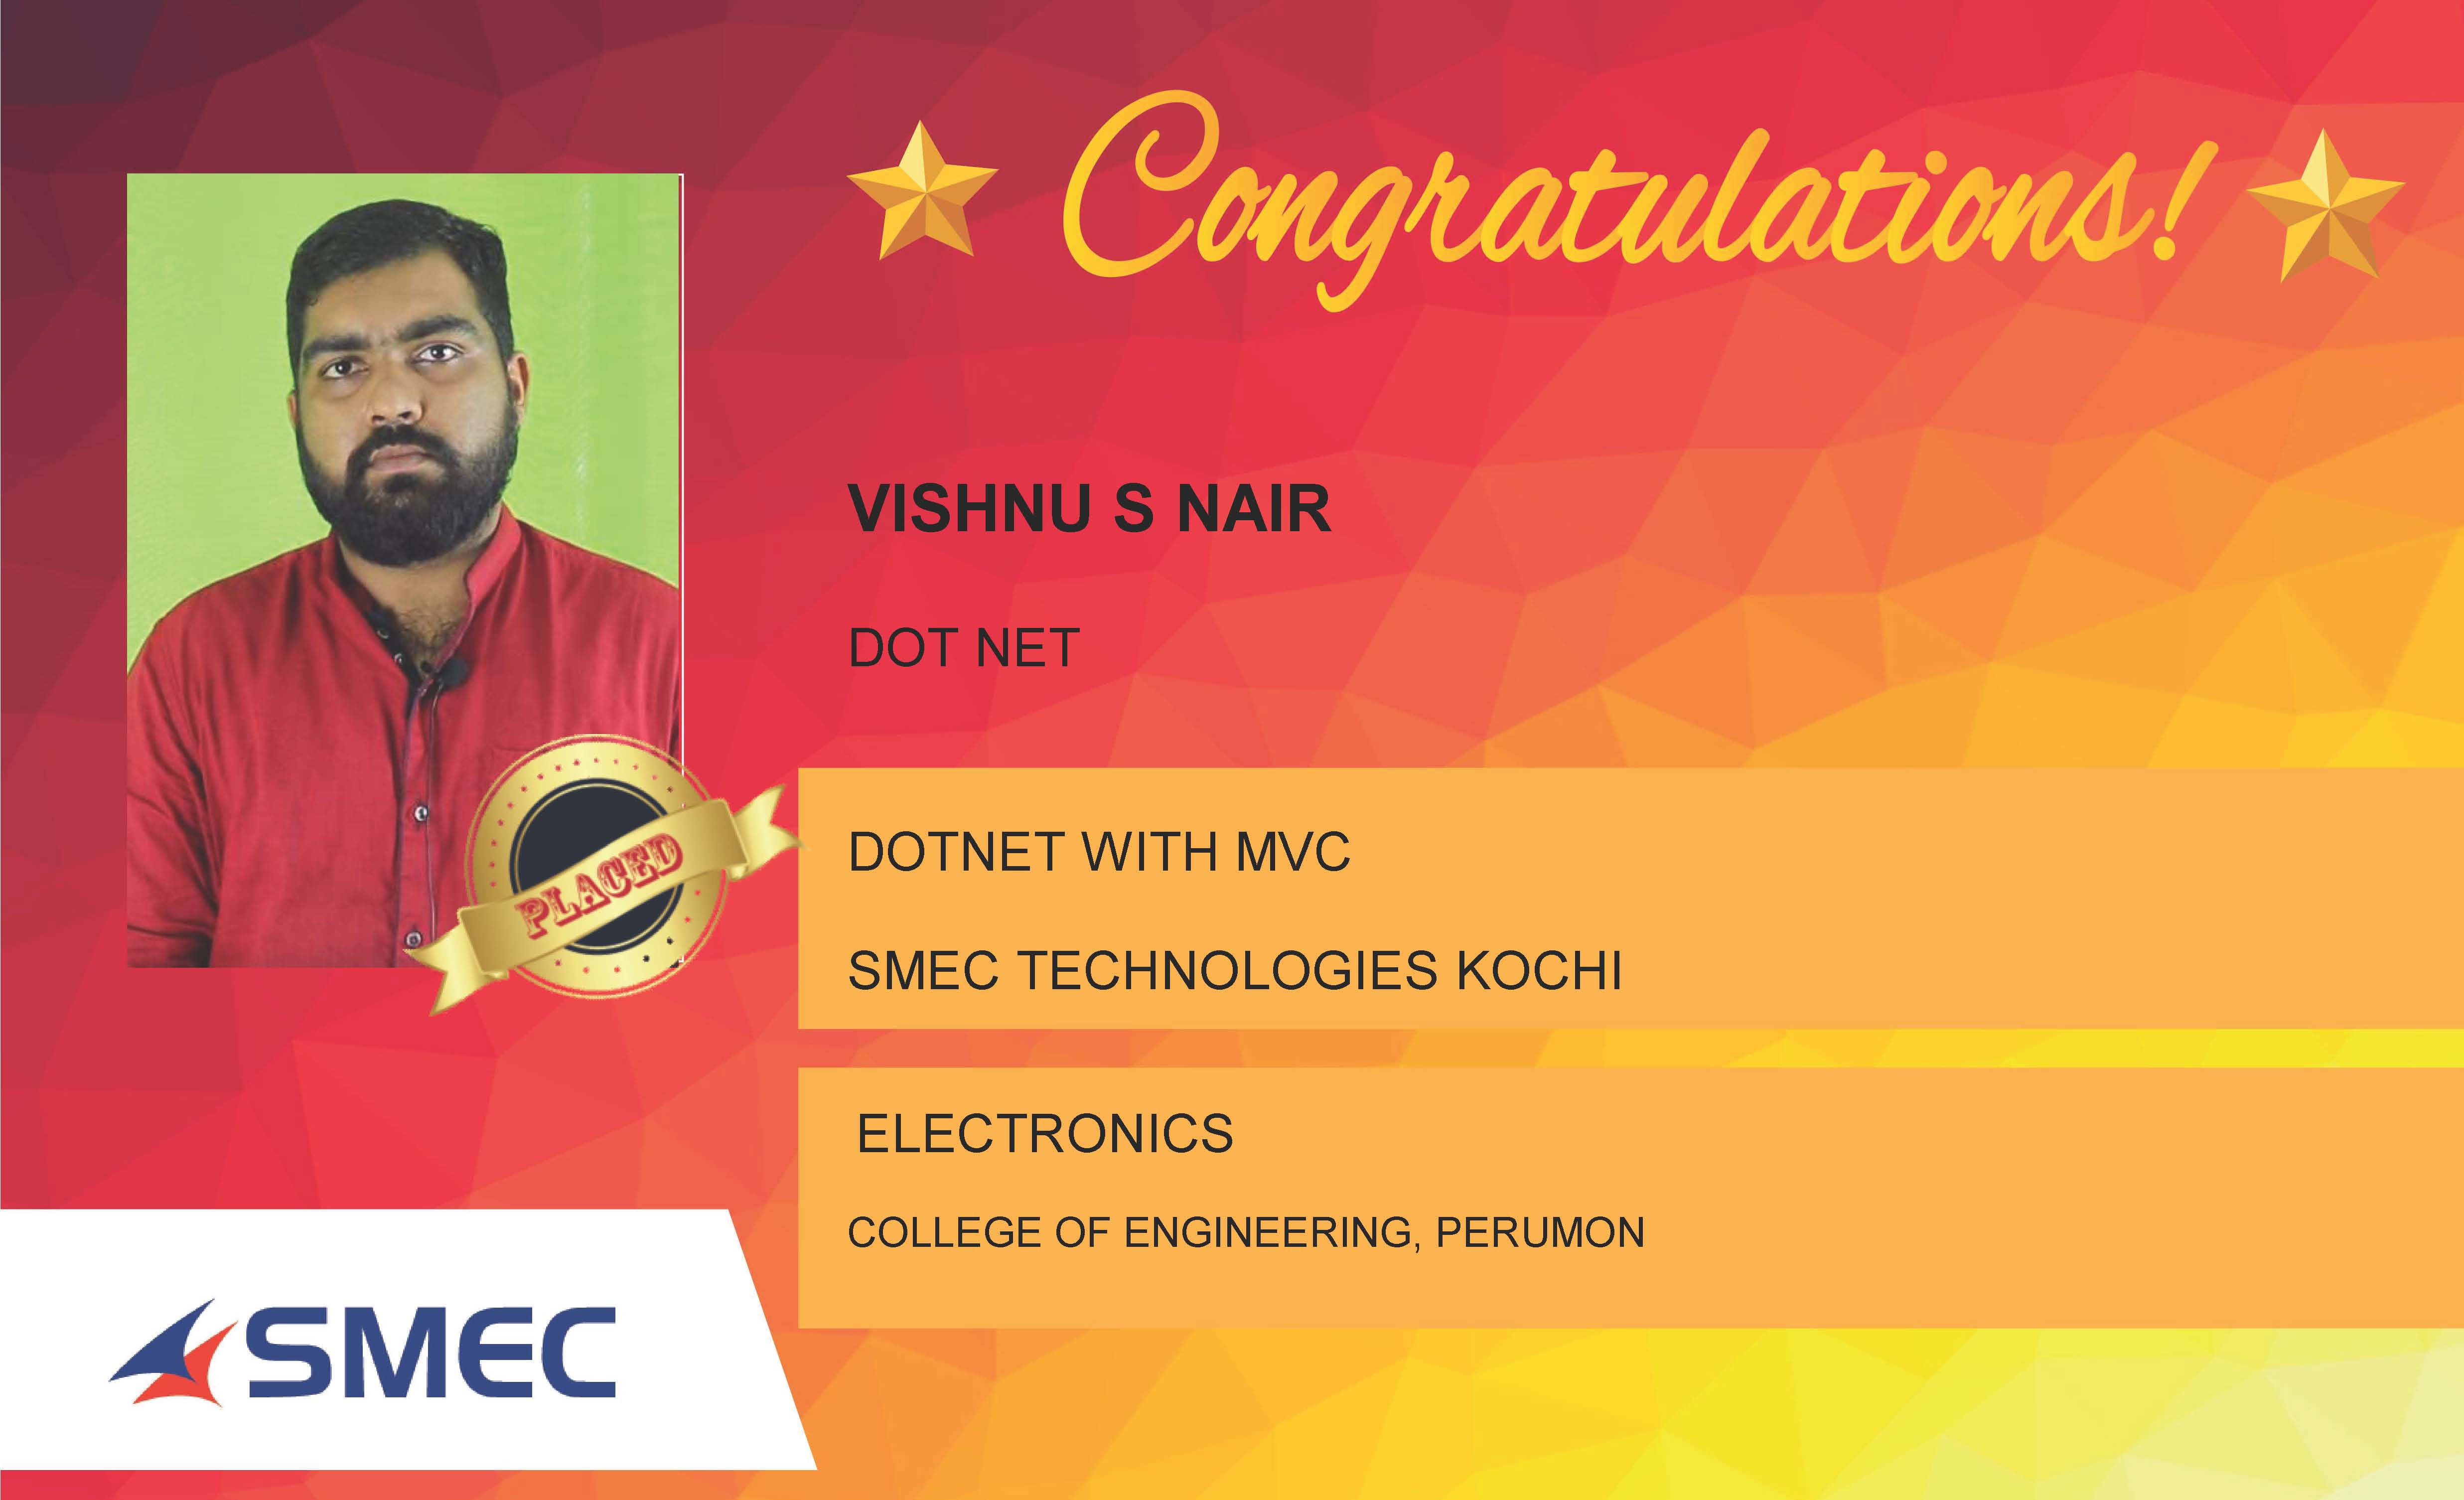 Vishnu S Nair Placed Successfully DOTNET With MVC